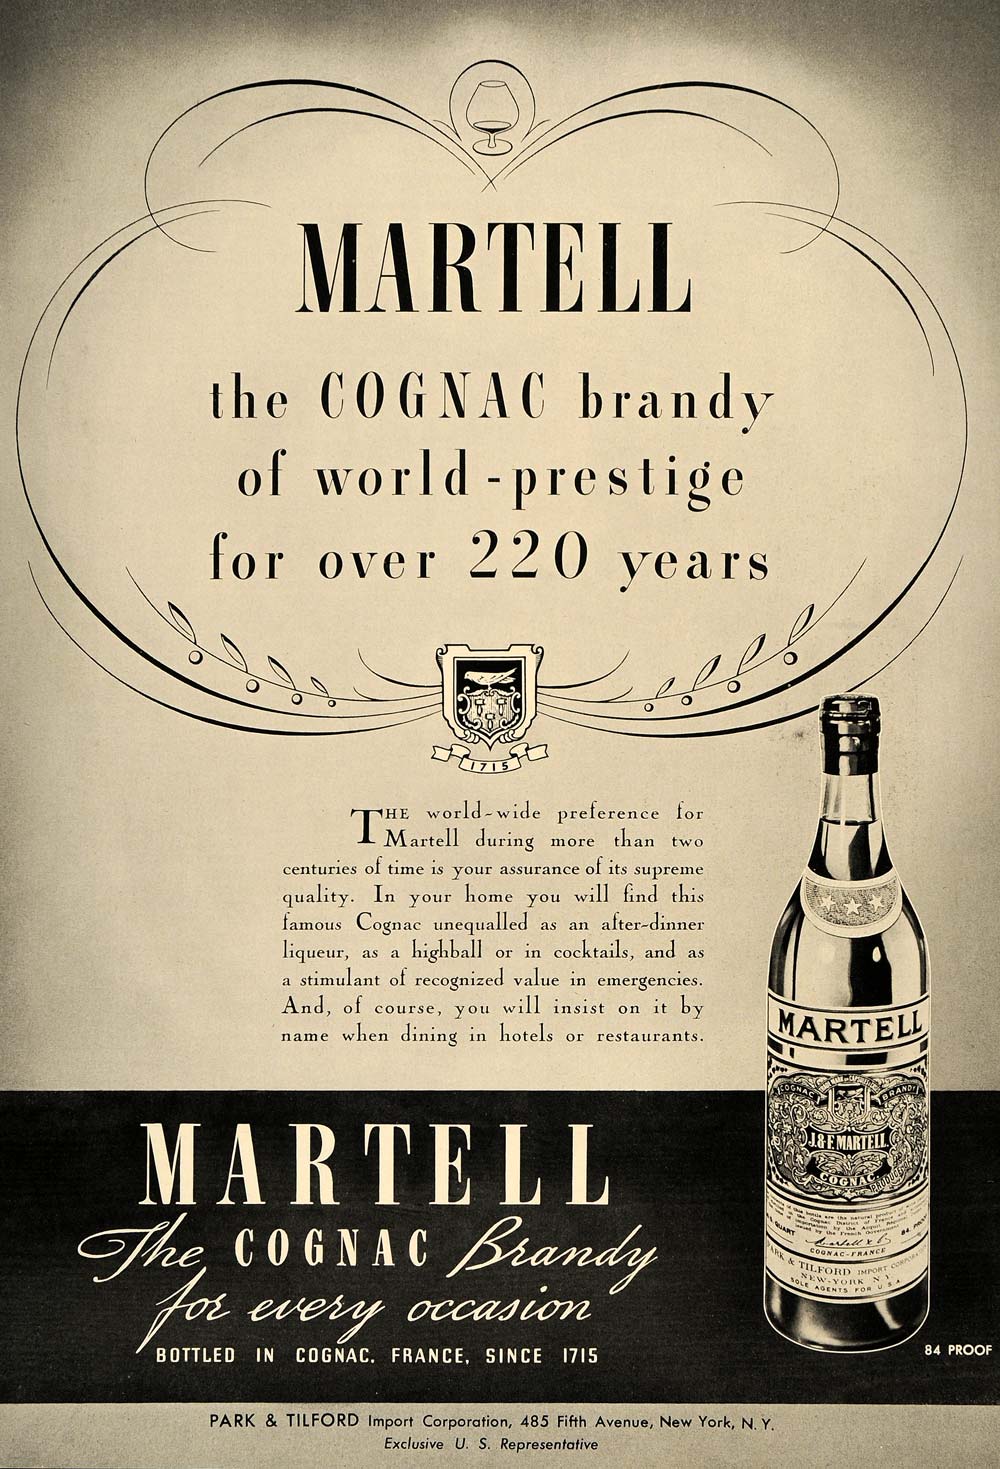 1936 Ad Park Tilford Imports Martell Cognac Brandy - ORIGINAL ADVERTISING ESQ1